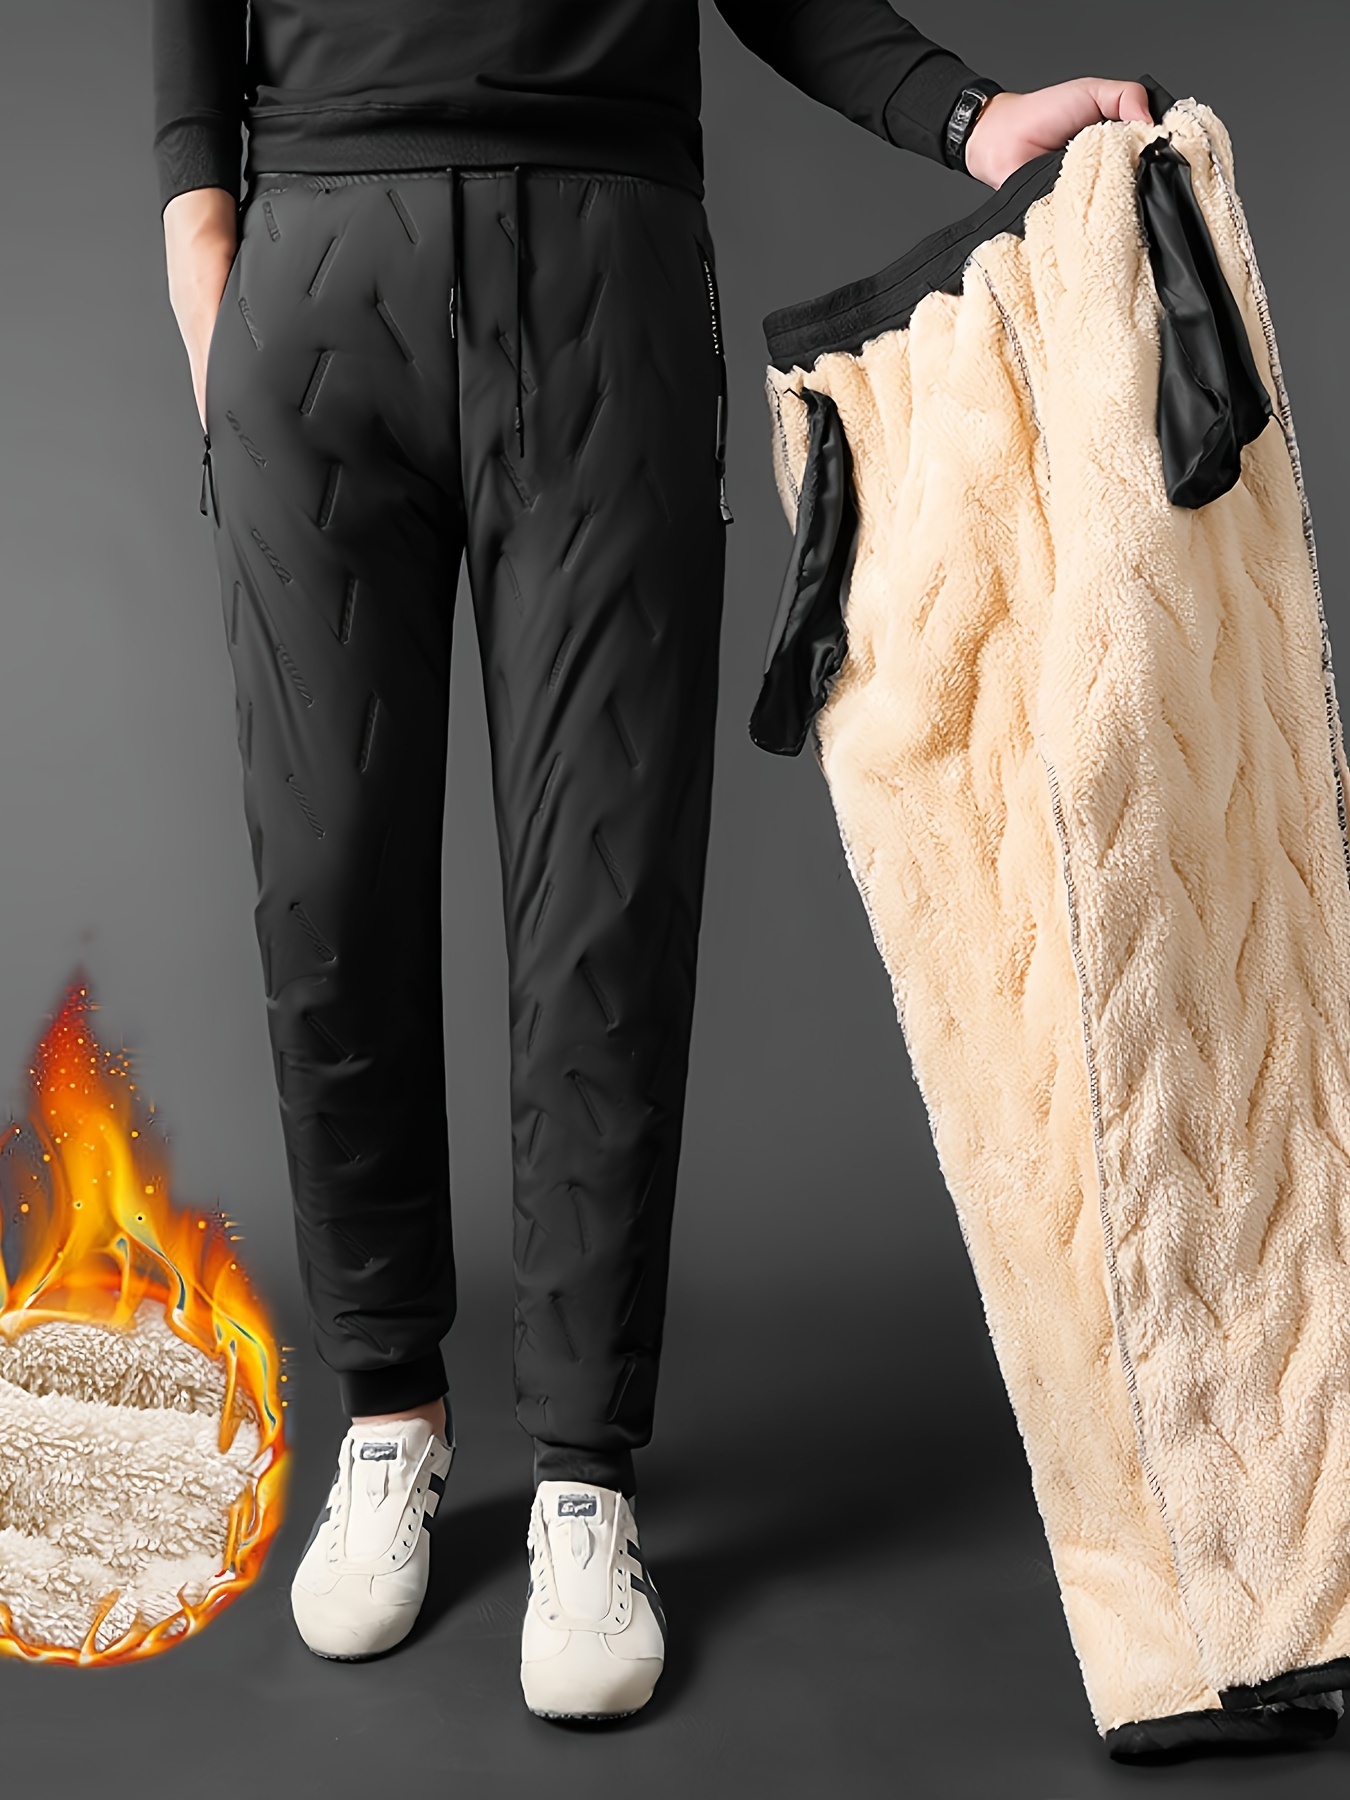 Ladies THERMAL LINED Thick Trousers Pants Multi Pocket Warm Leggings fleece